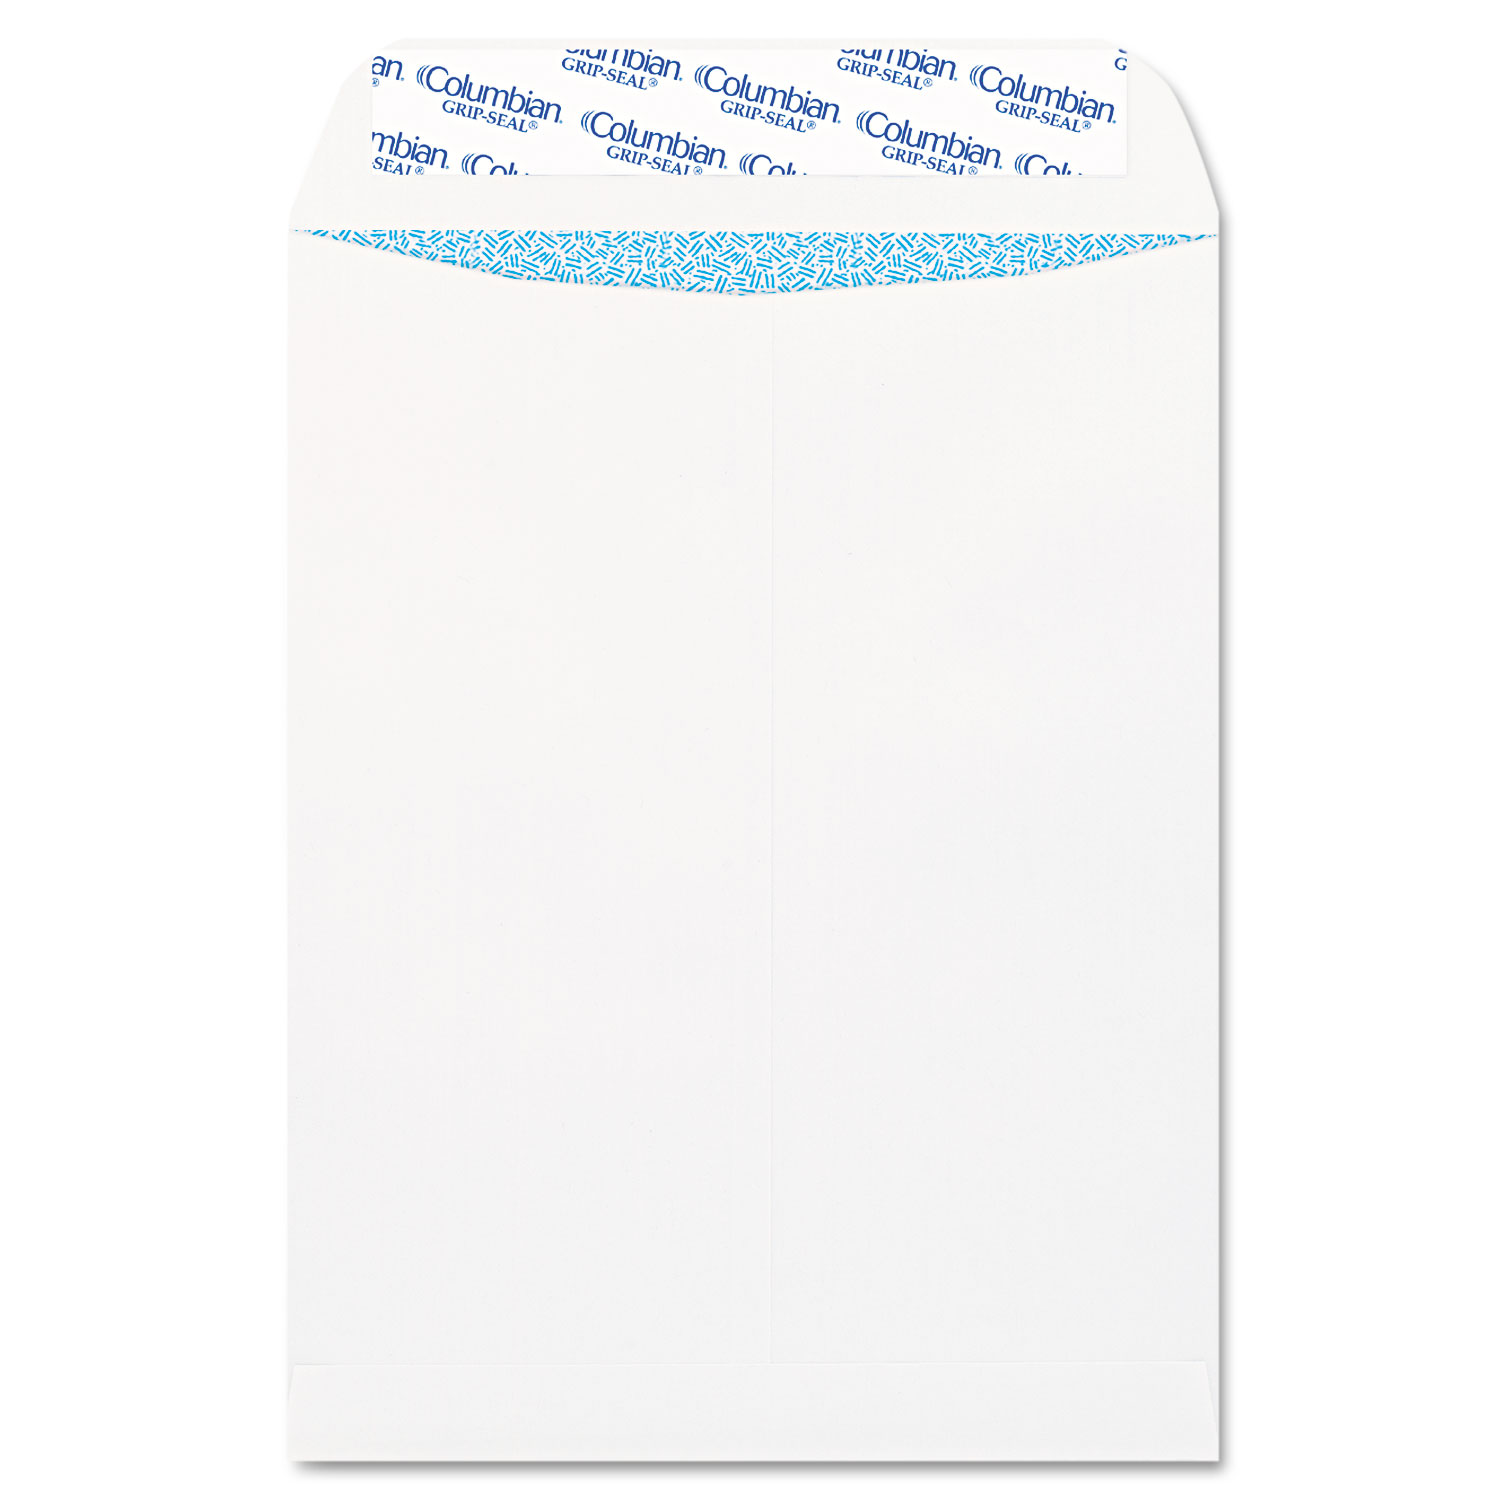  Columbian COLO926 Grip-Seal Security Tinted All-Purpose Catalog Envelope, #10 1/2, Cheese Blade Flap, Grip-Seal Closure, 9 x 12, White, 100/Box (QUACO926) 